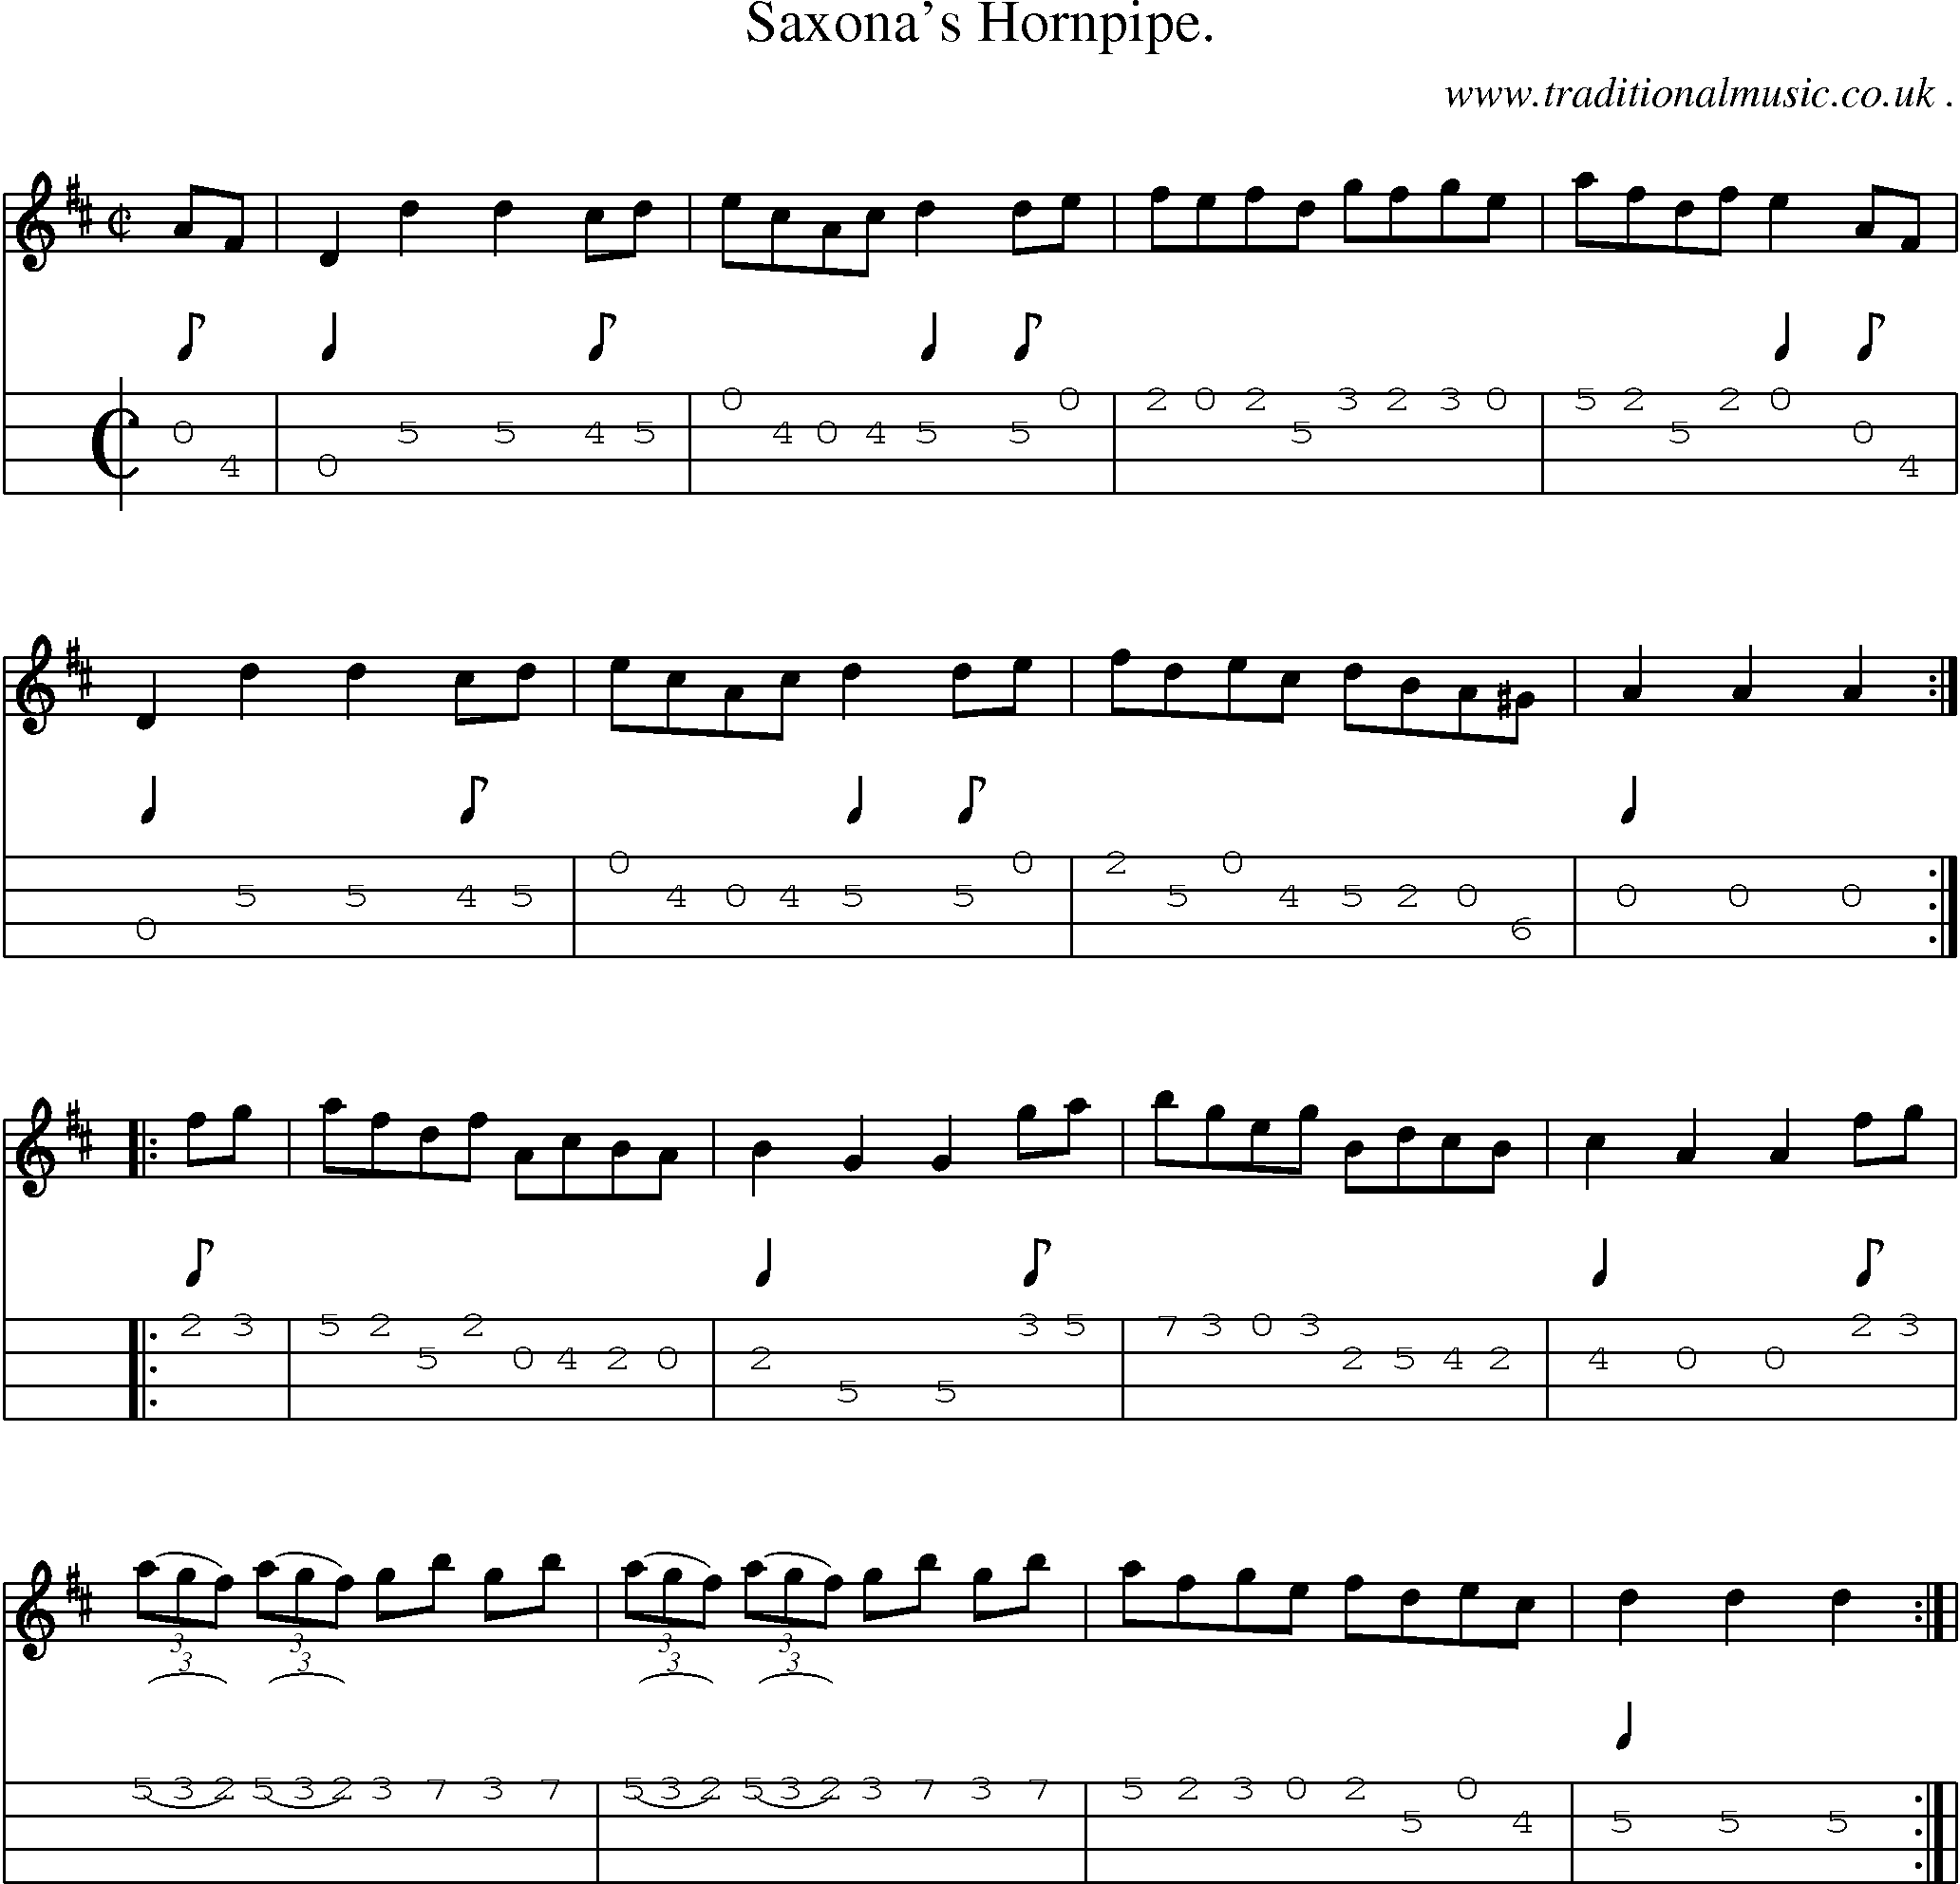 Sheet-Music and Mandolin Tabs for Saxonas Hornpipe